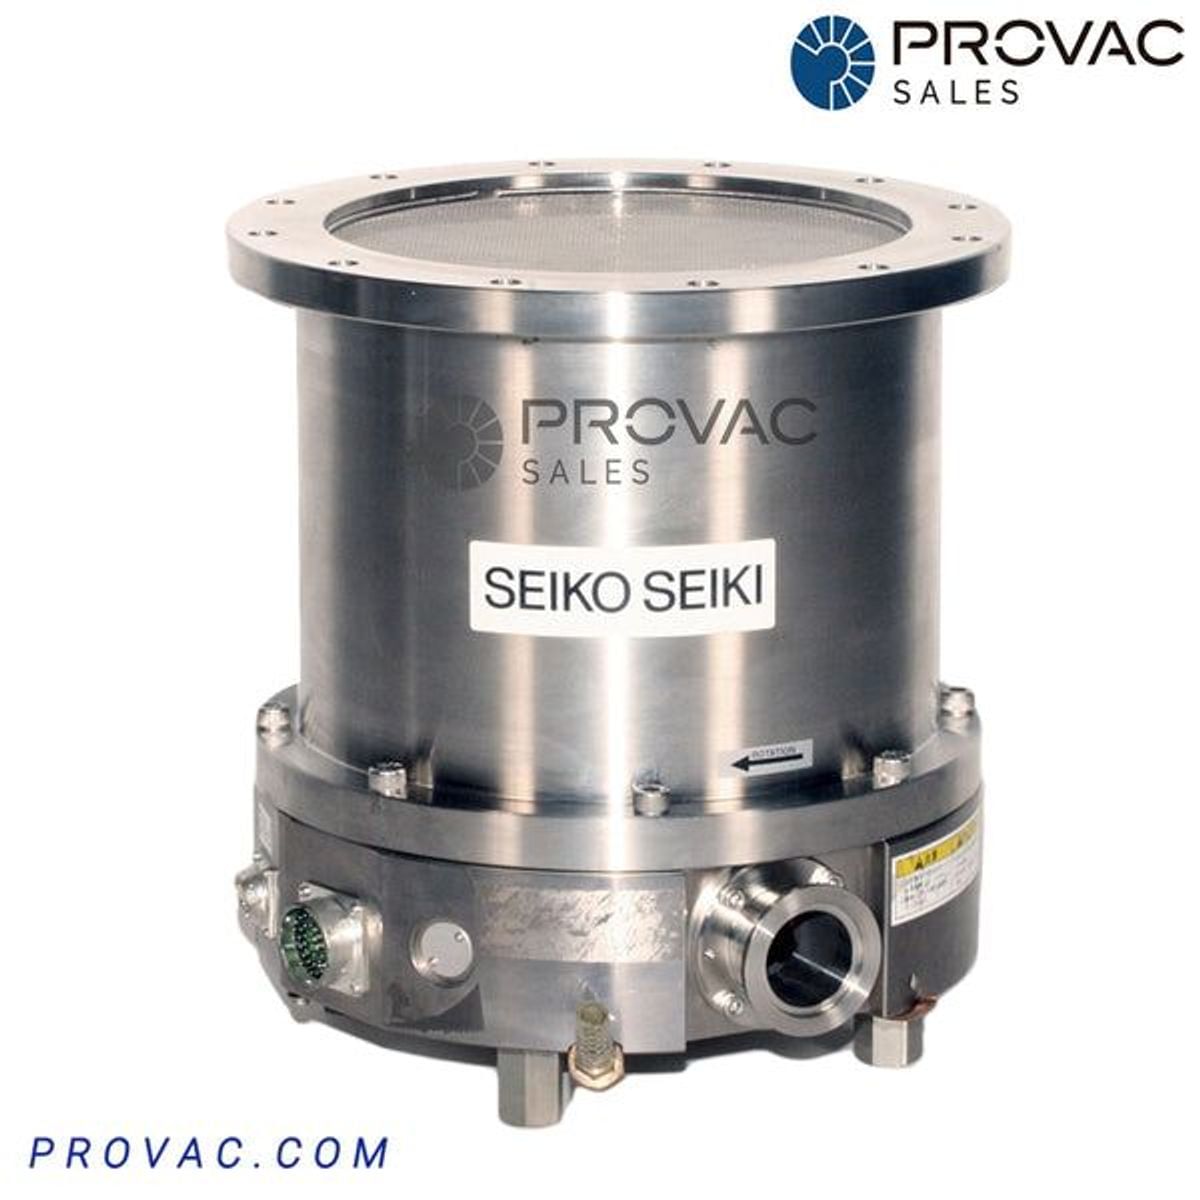 Seiko Seiki STP-H1301C Turbo Pump, Rebuilt Image 1